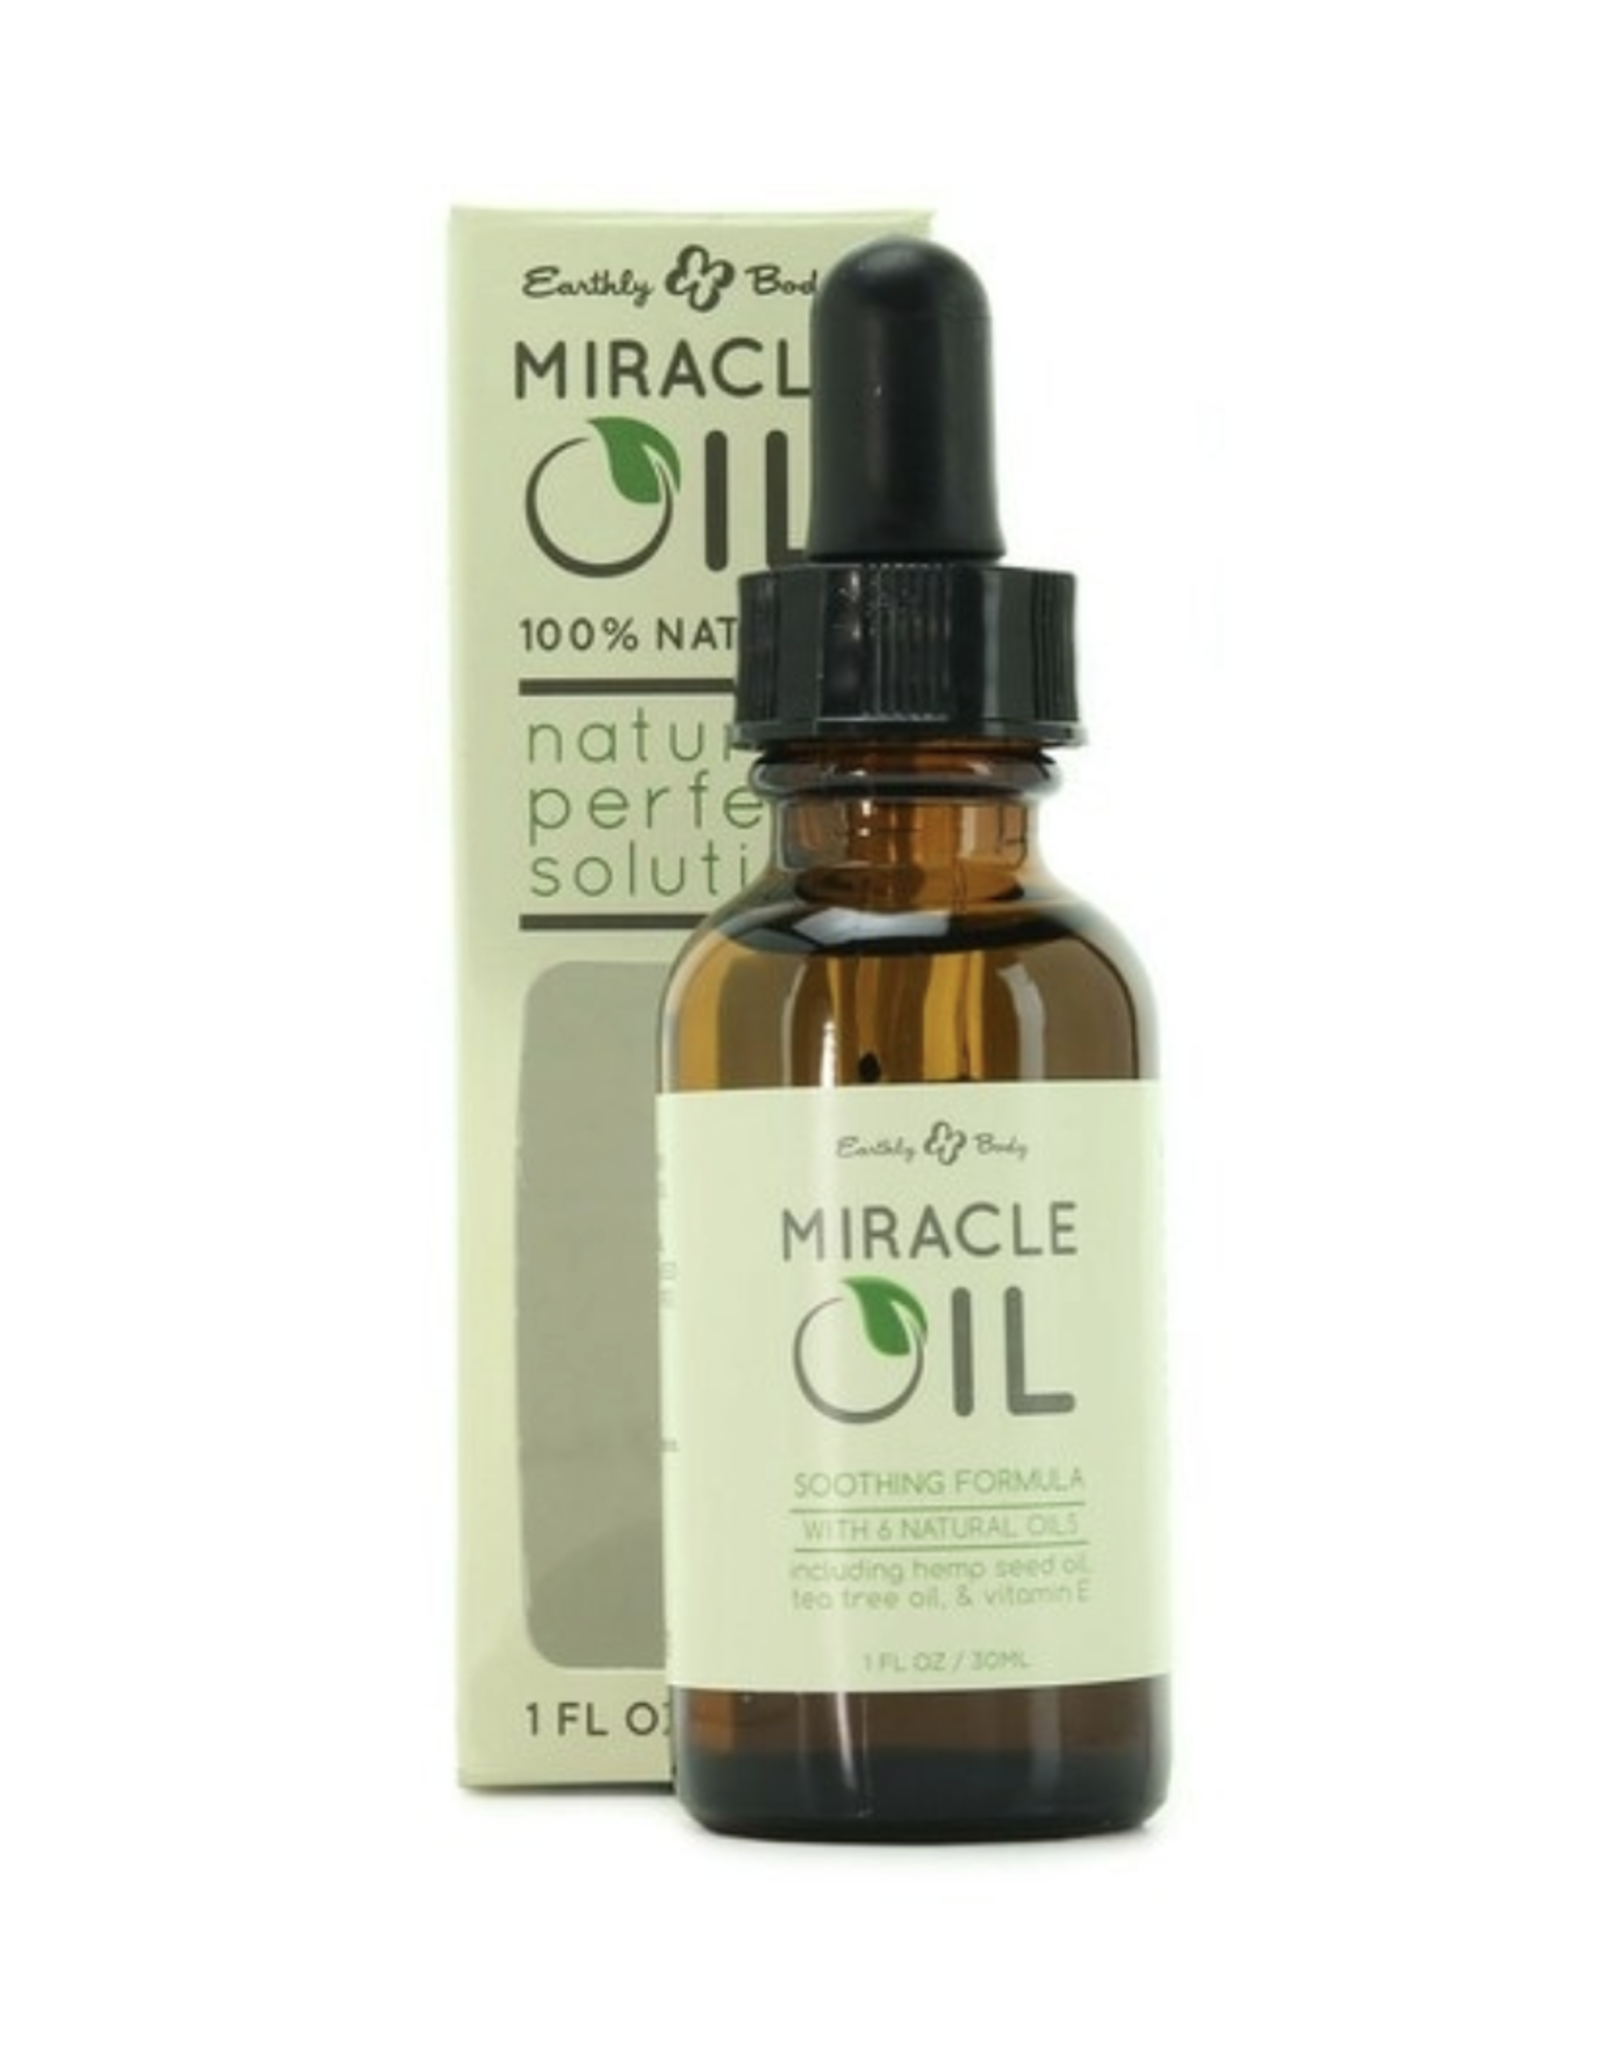 Earthly Body Earthly Body Miracle Oil